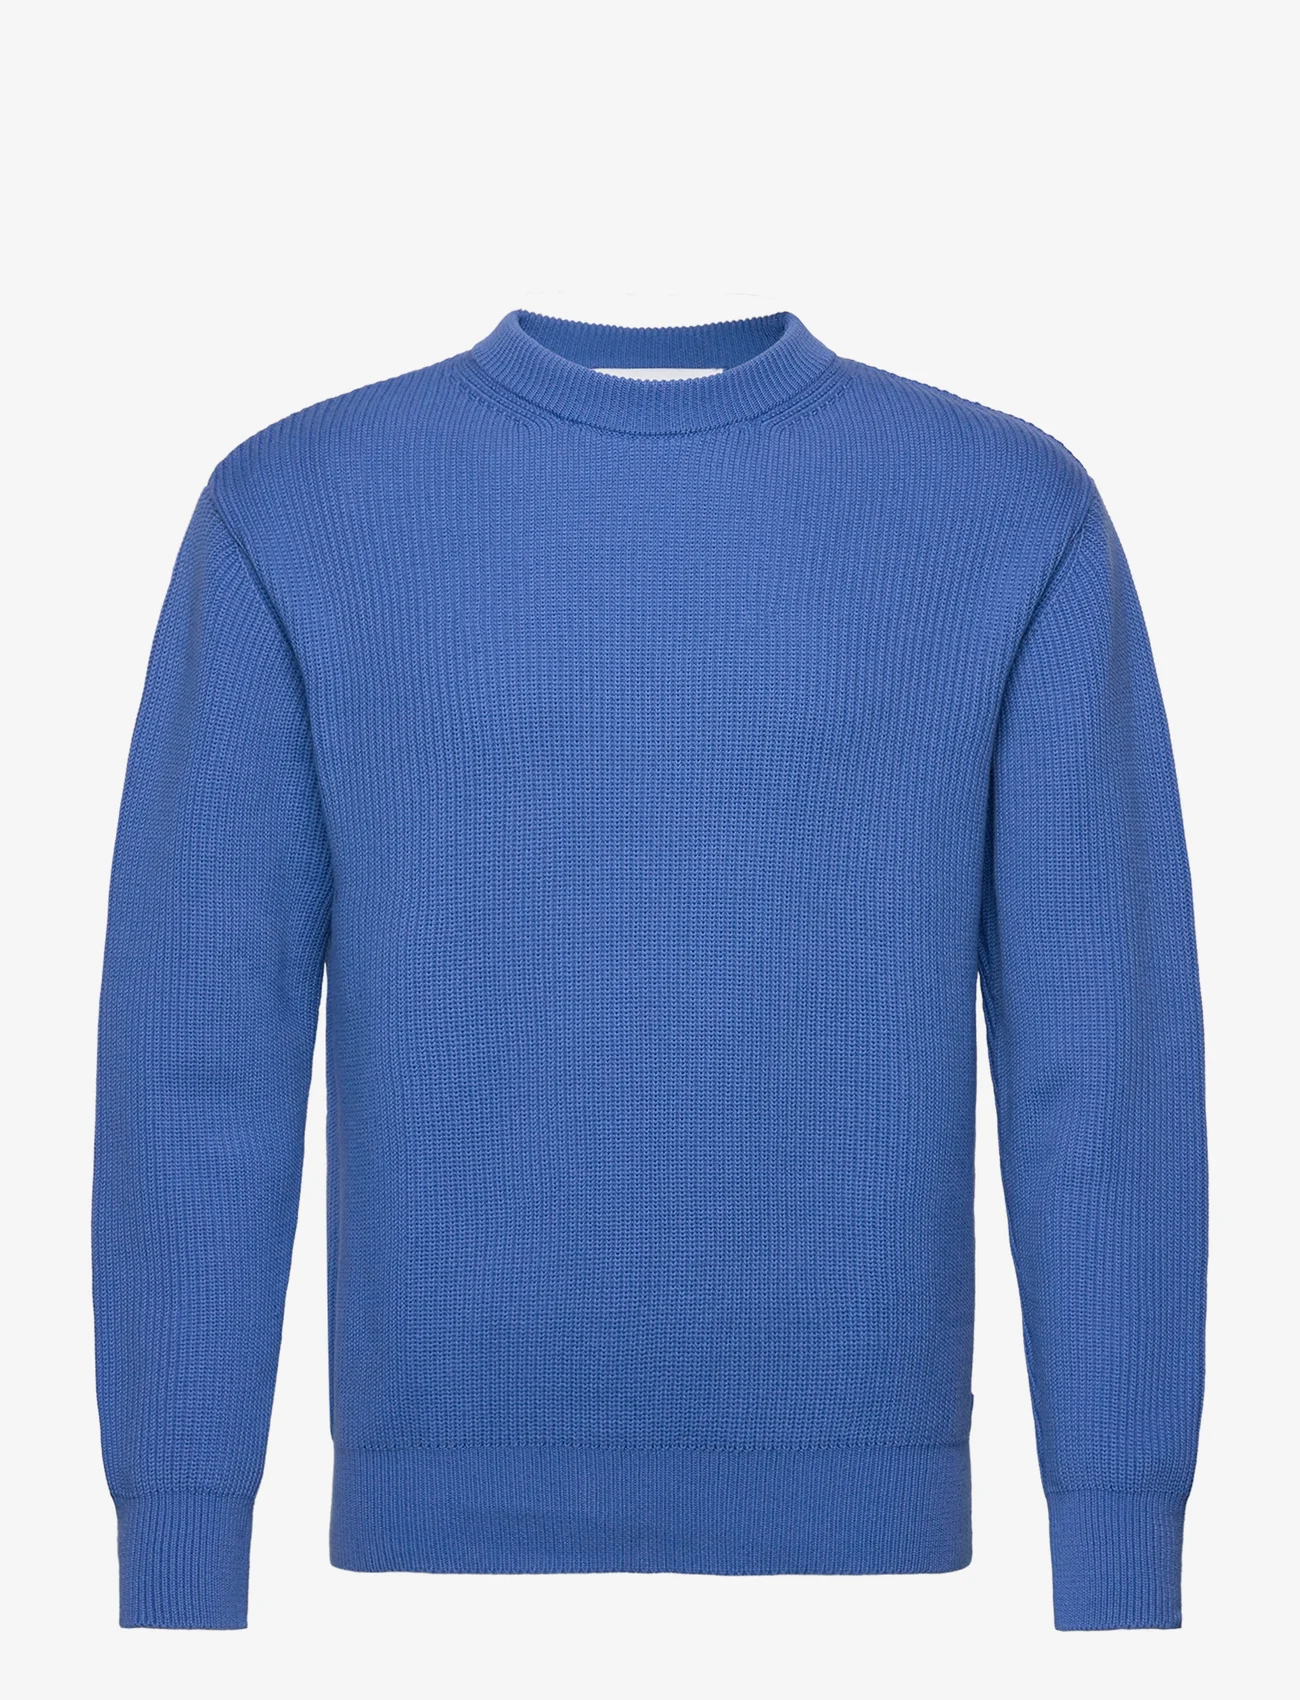 Garment Project - Round Neck Knit - Blue - adījumi ar apaļu kakla izgriezumu - blue - 0